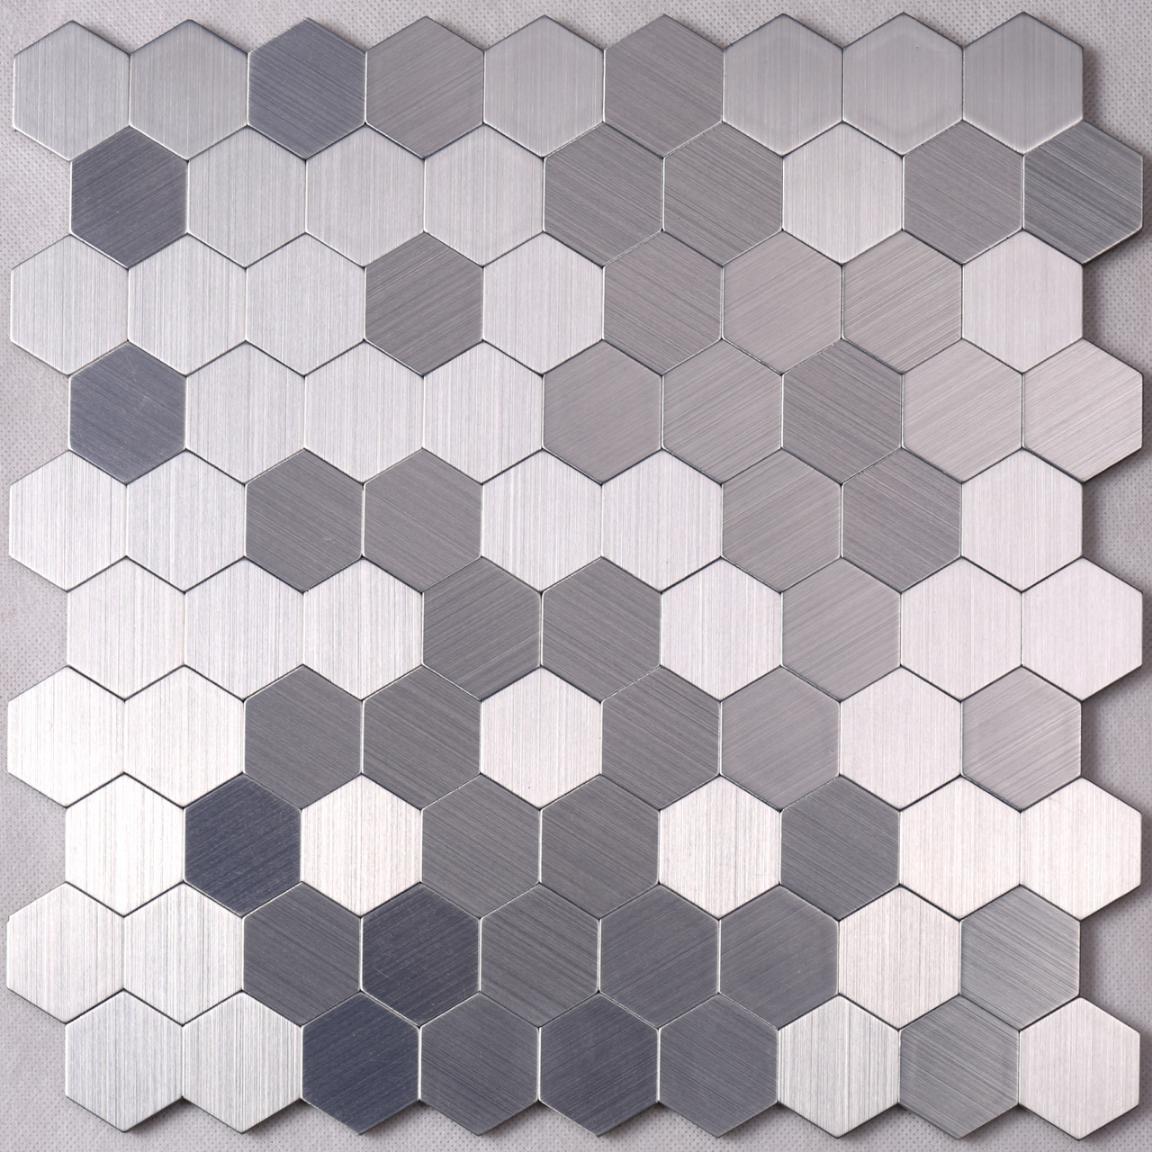 Heng Xing beveled metal tiles for business for restuarant-1